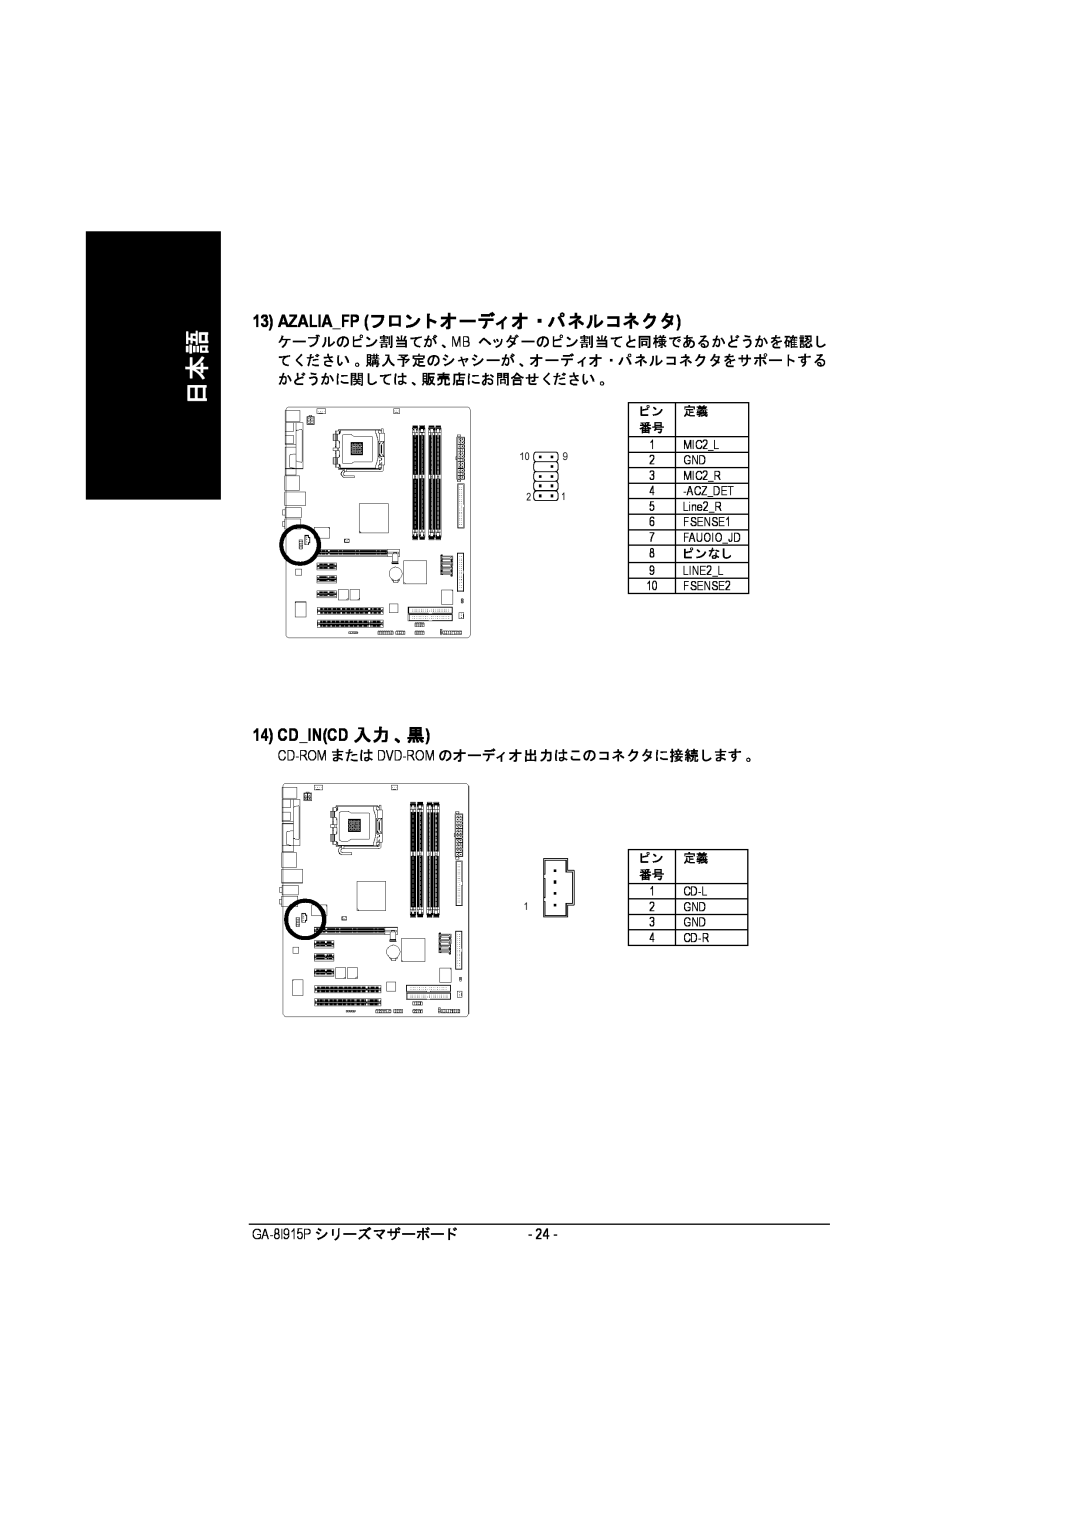 Intel GA-8I915P manual Azaliafp フロン トオーディ オ ・パネルコネク タ, Cdincd 入力、黒 